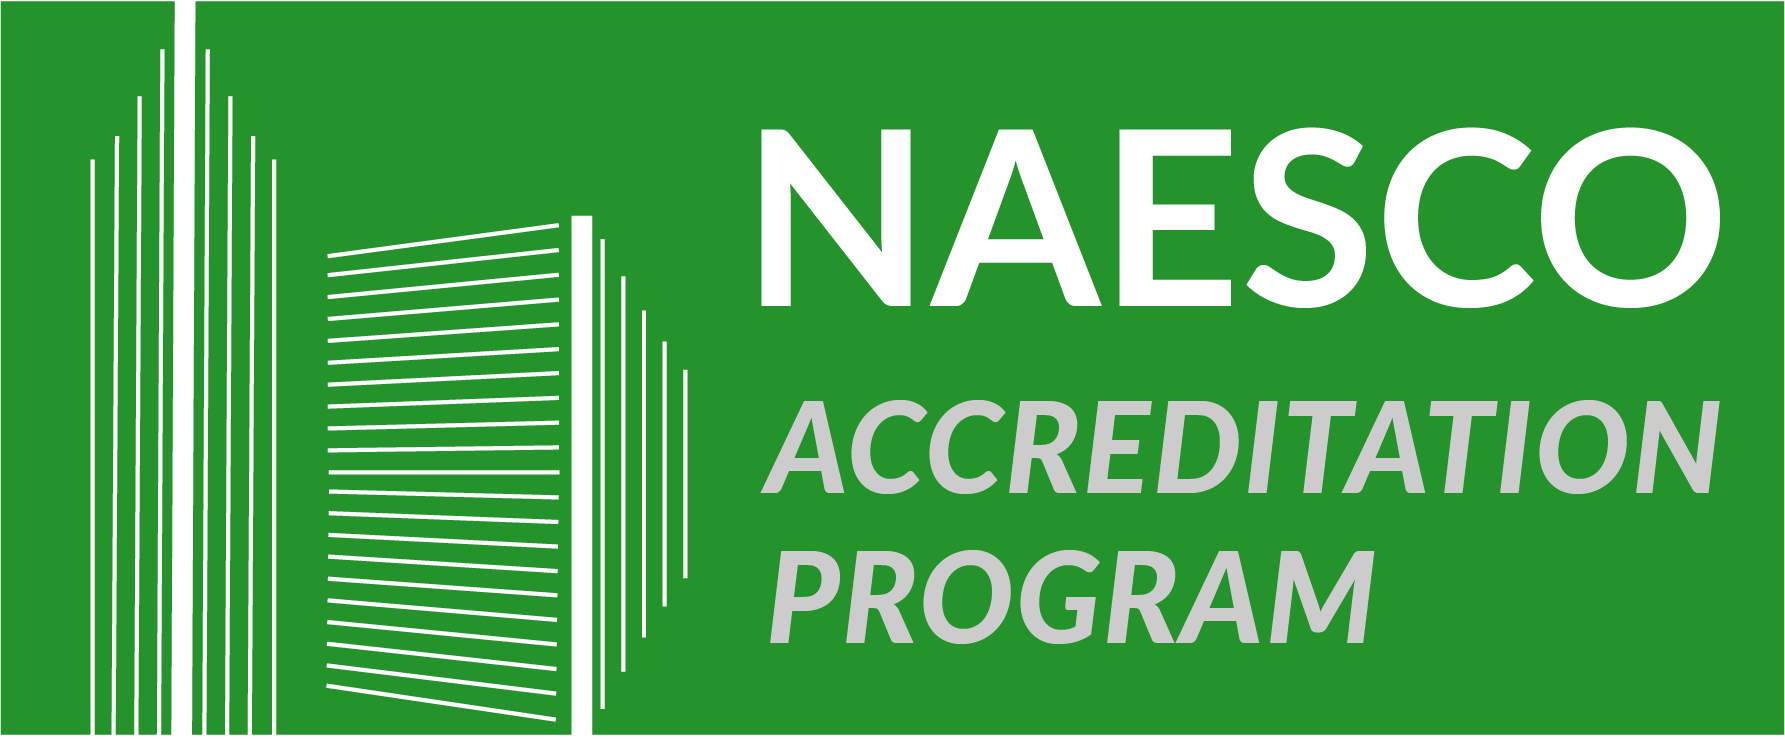 NAESCO Accreditation Program